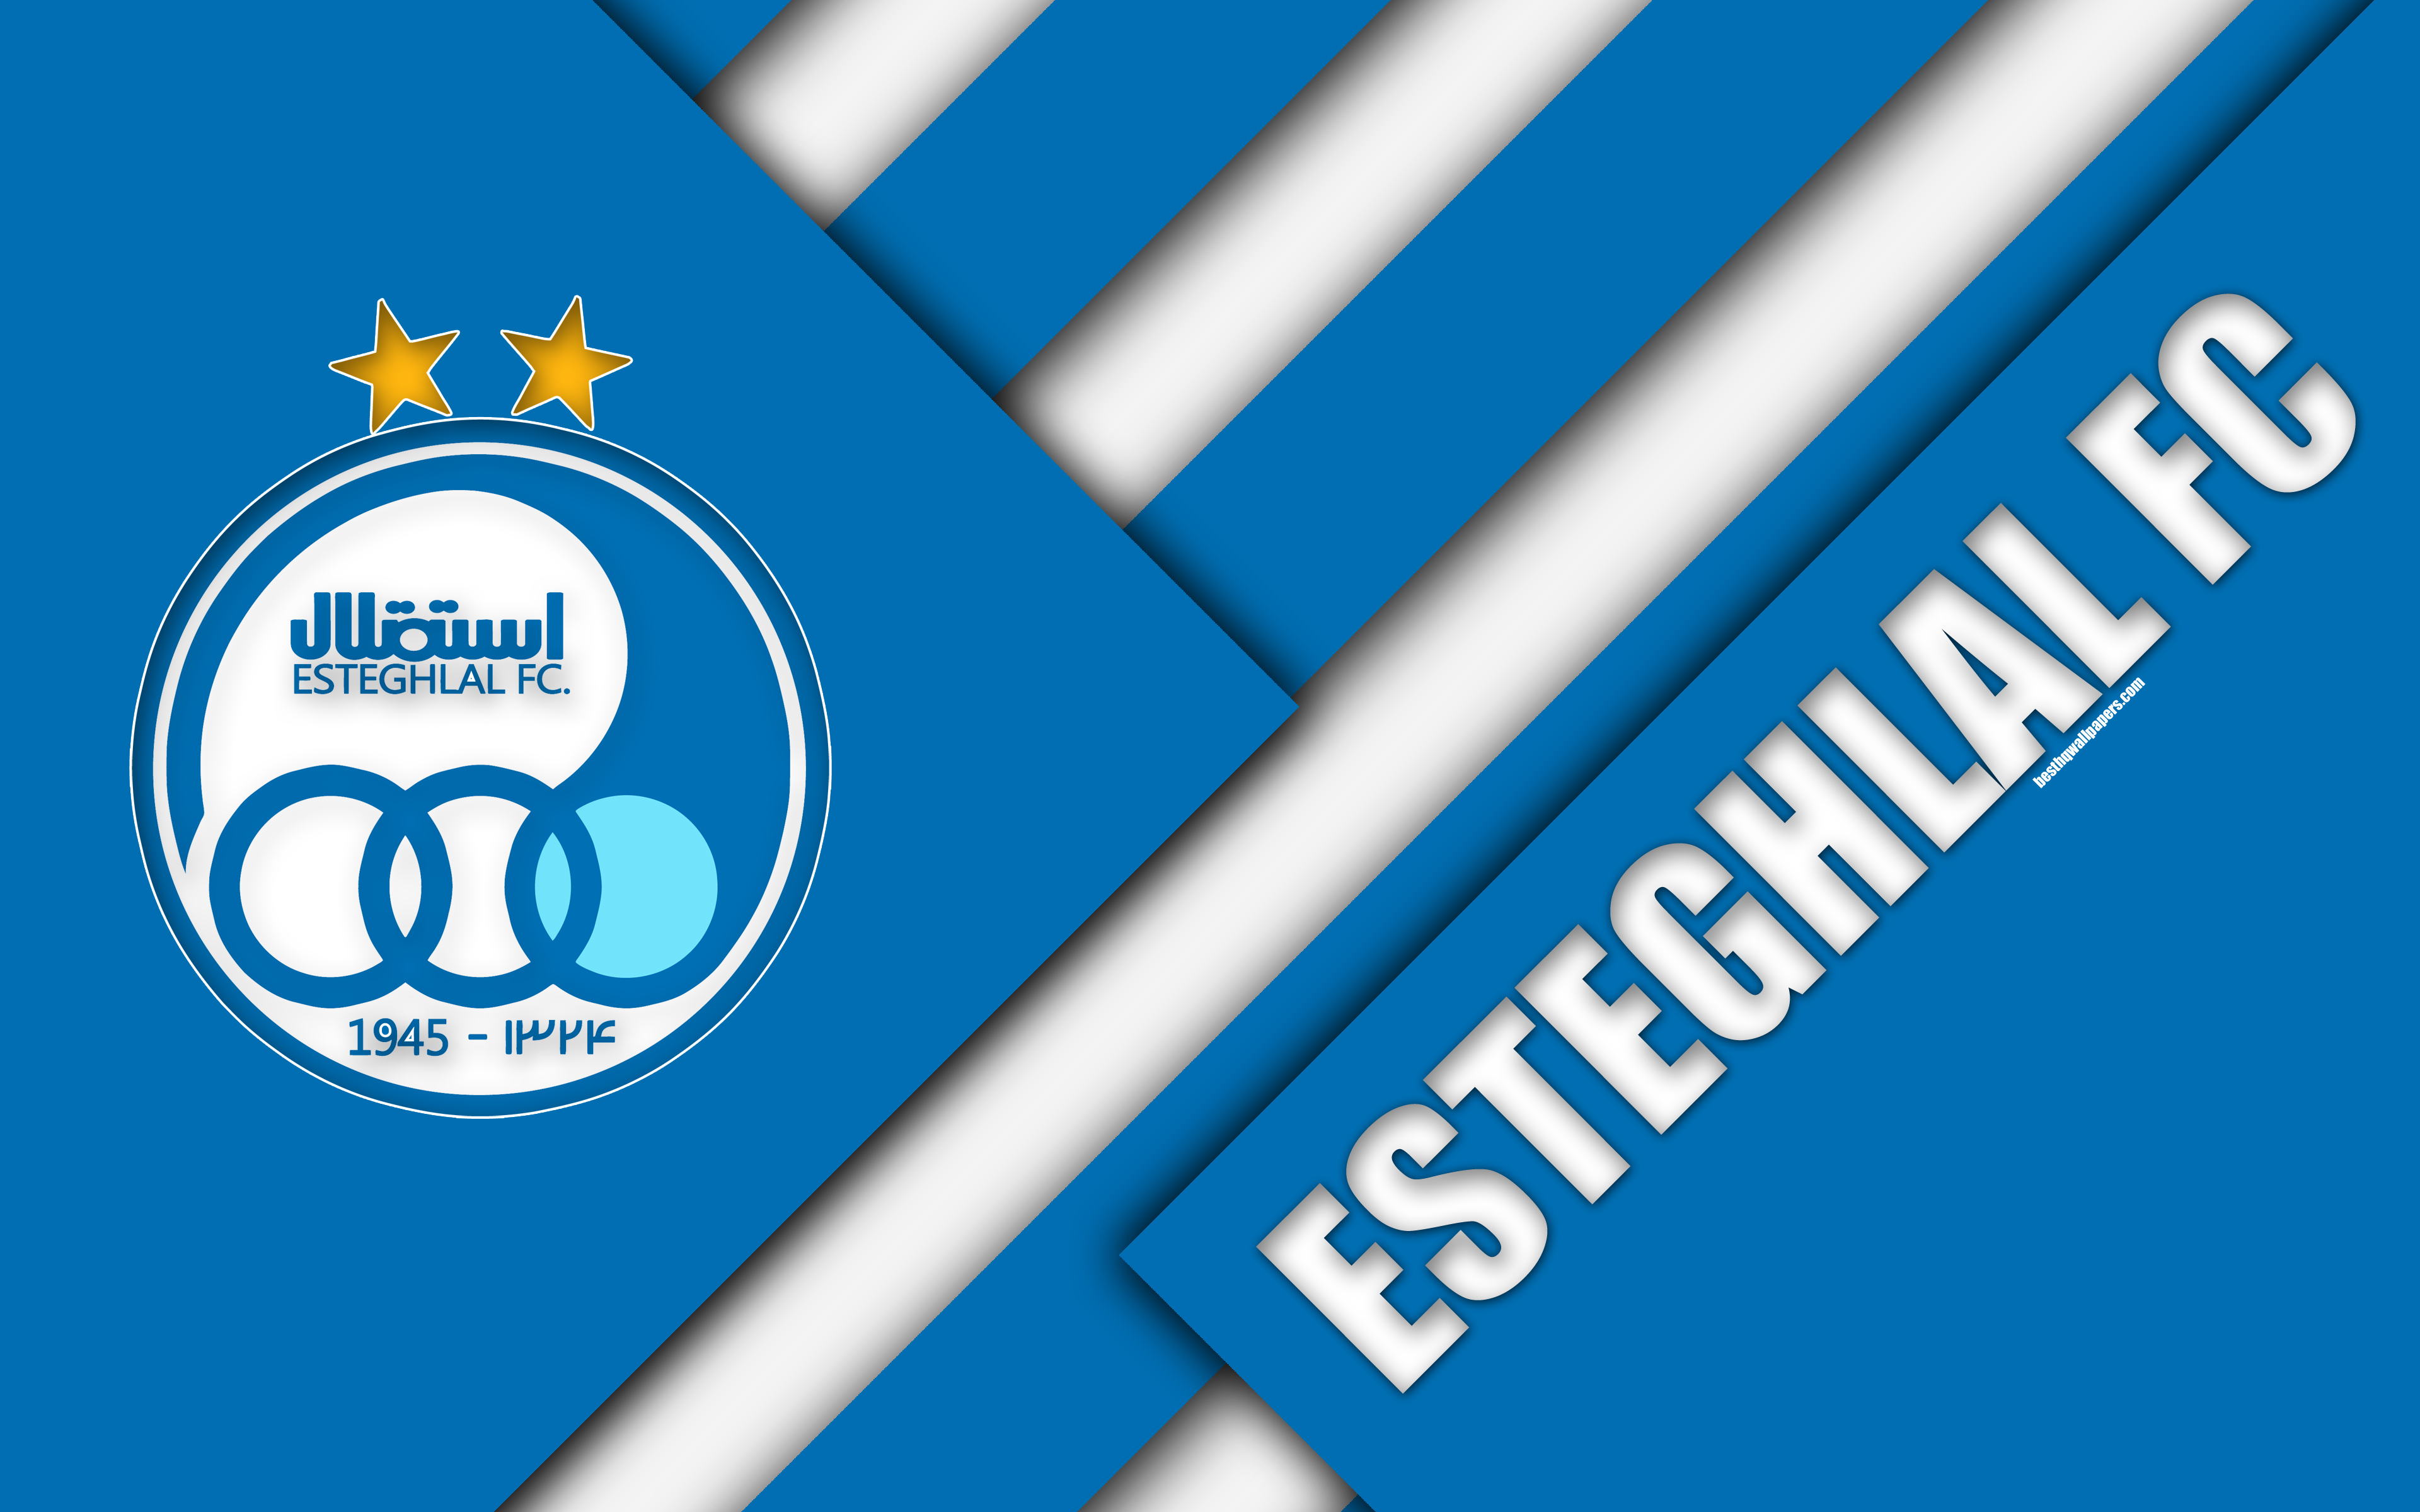 Wallpaper Esteghlal Fc 4k Iranian Football Club Logo